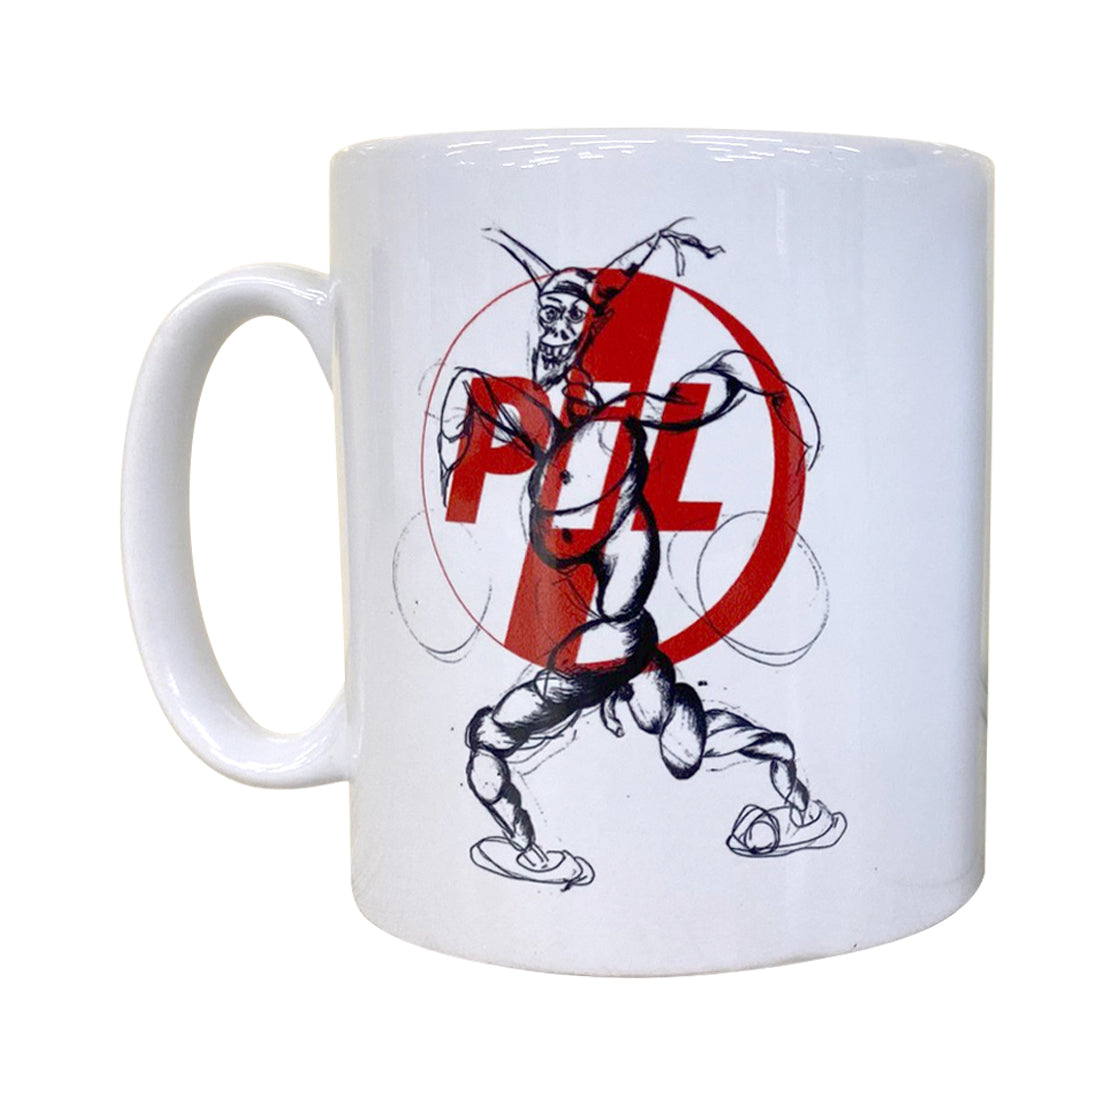 Public Image Ltd - Hokey Man Mug